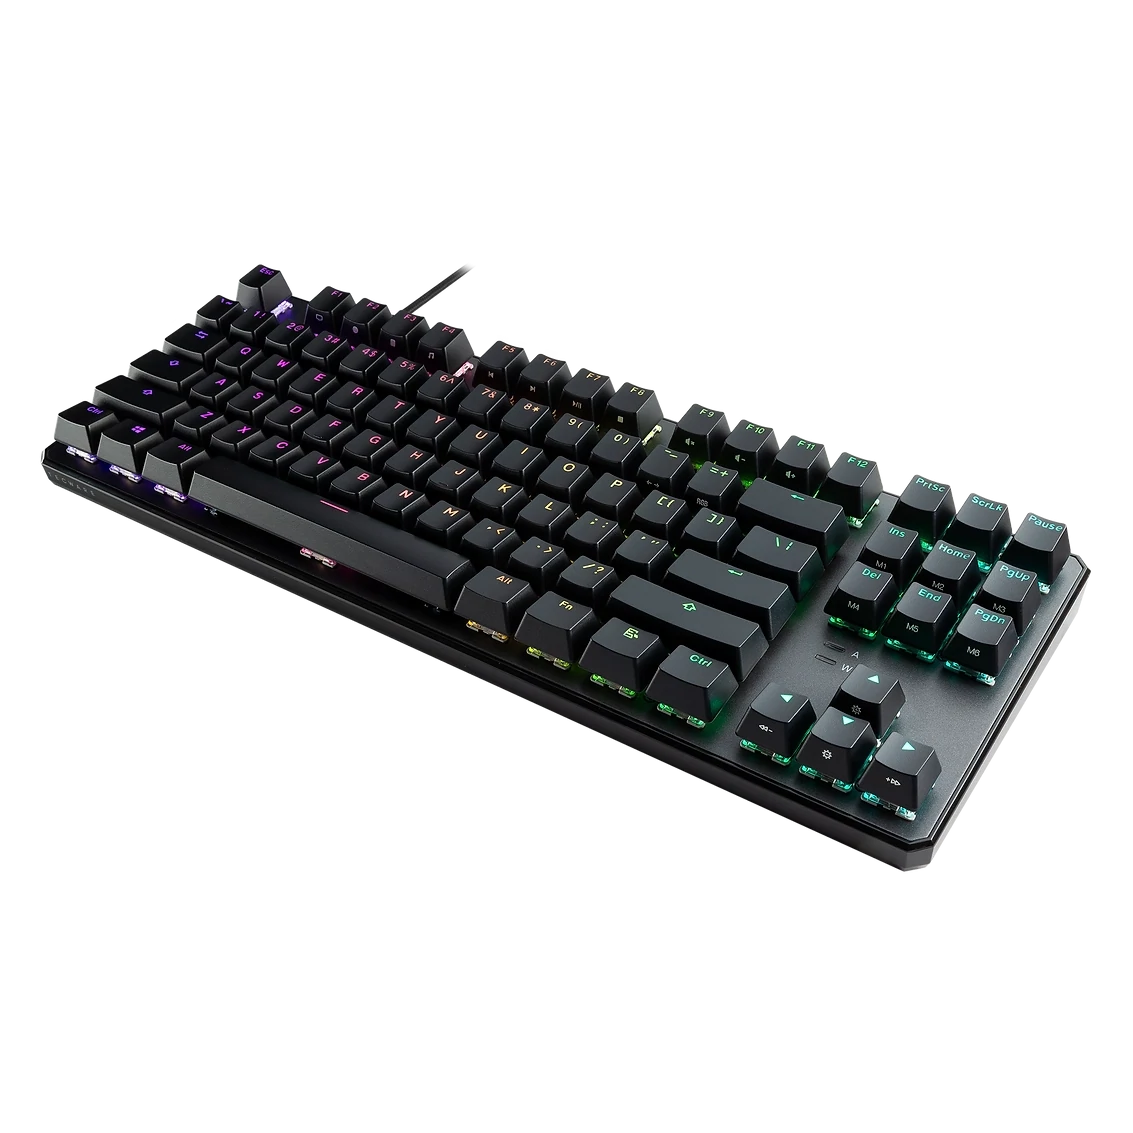 Tecware Phantom+ 87 RGB Mechanical Keyboard